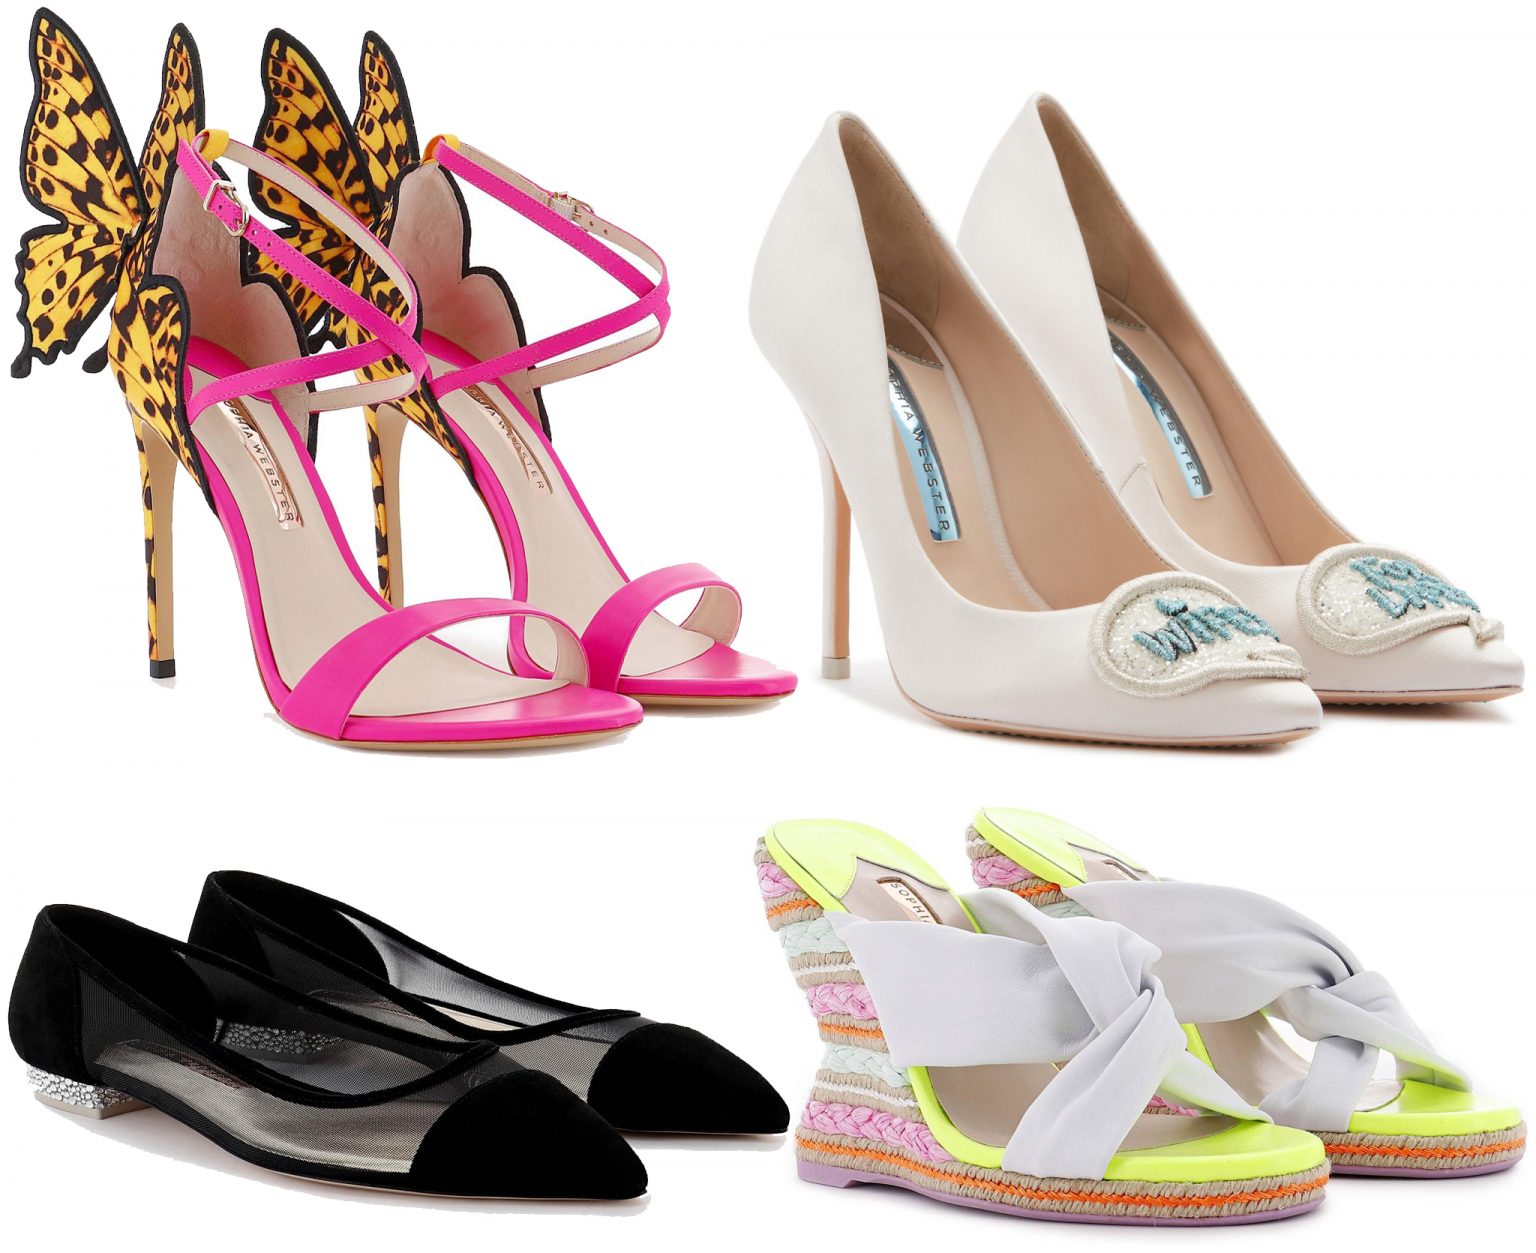 13 Most Popular Designer Shoe Brands for Women The Ultimate